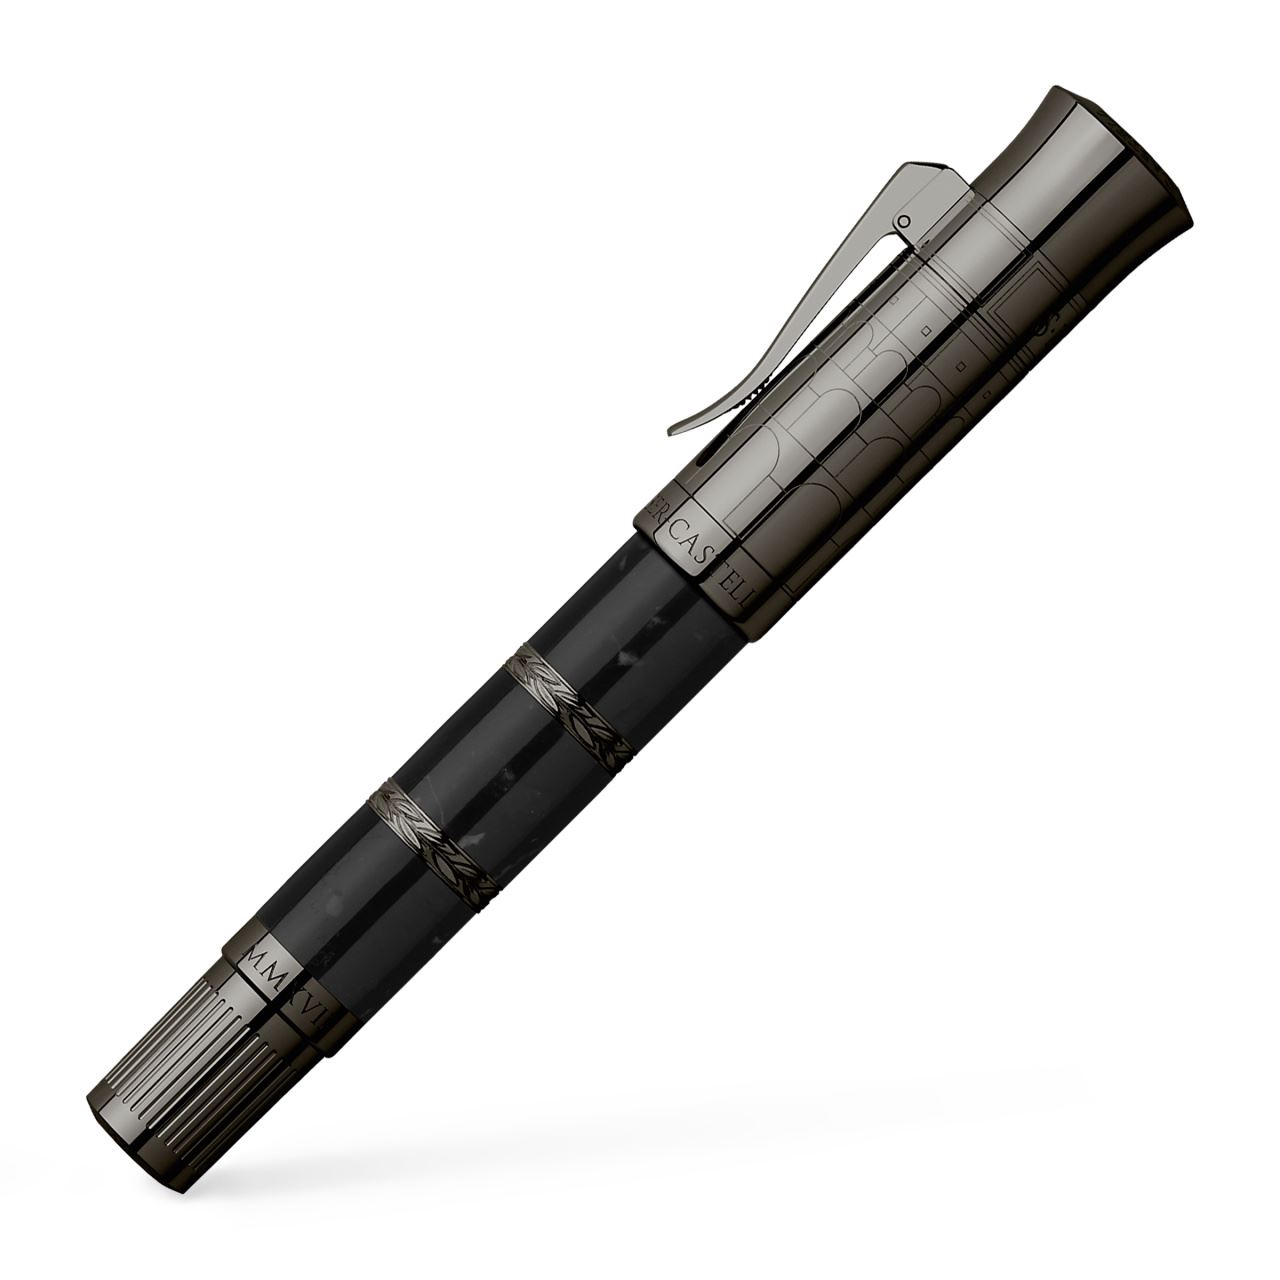 Graf-von-Faber-Castell - Tintenroller Pen of the Year 2018 Black Edition